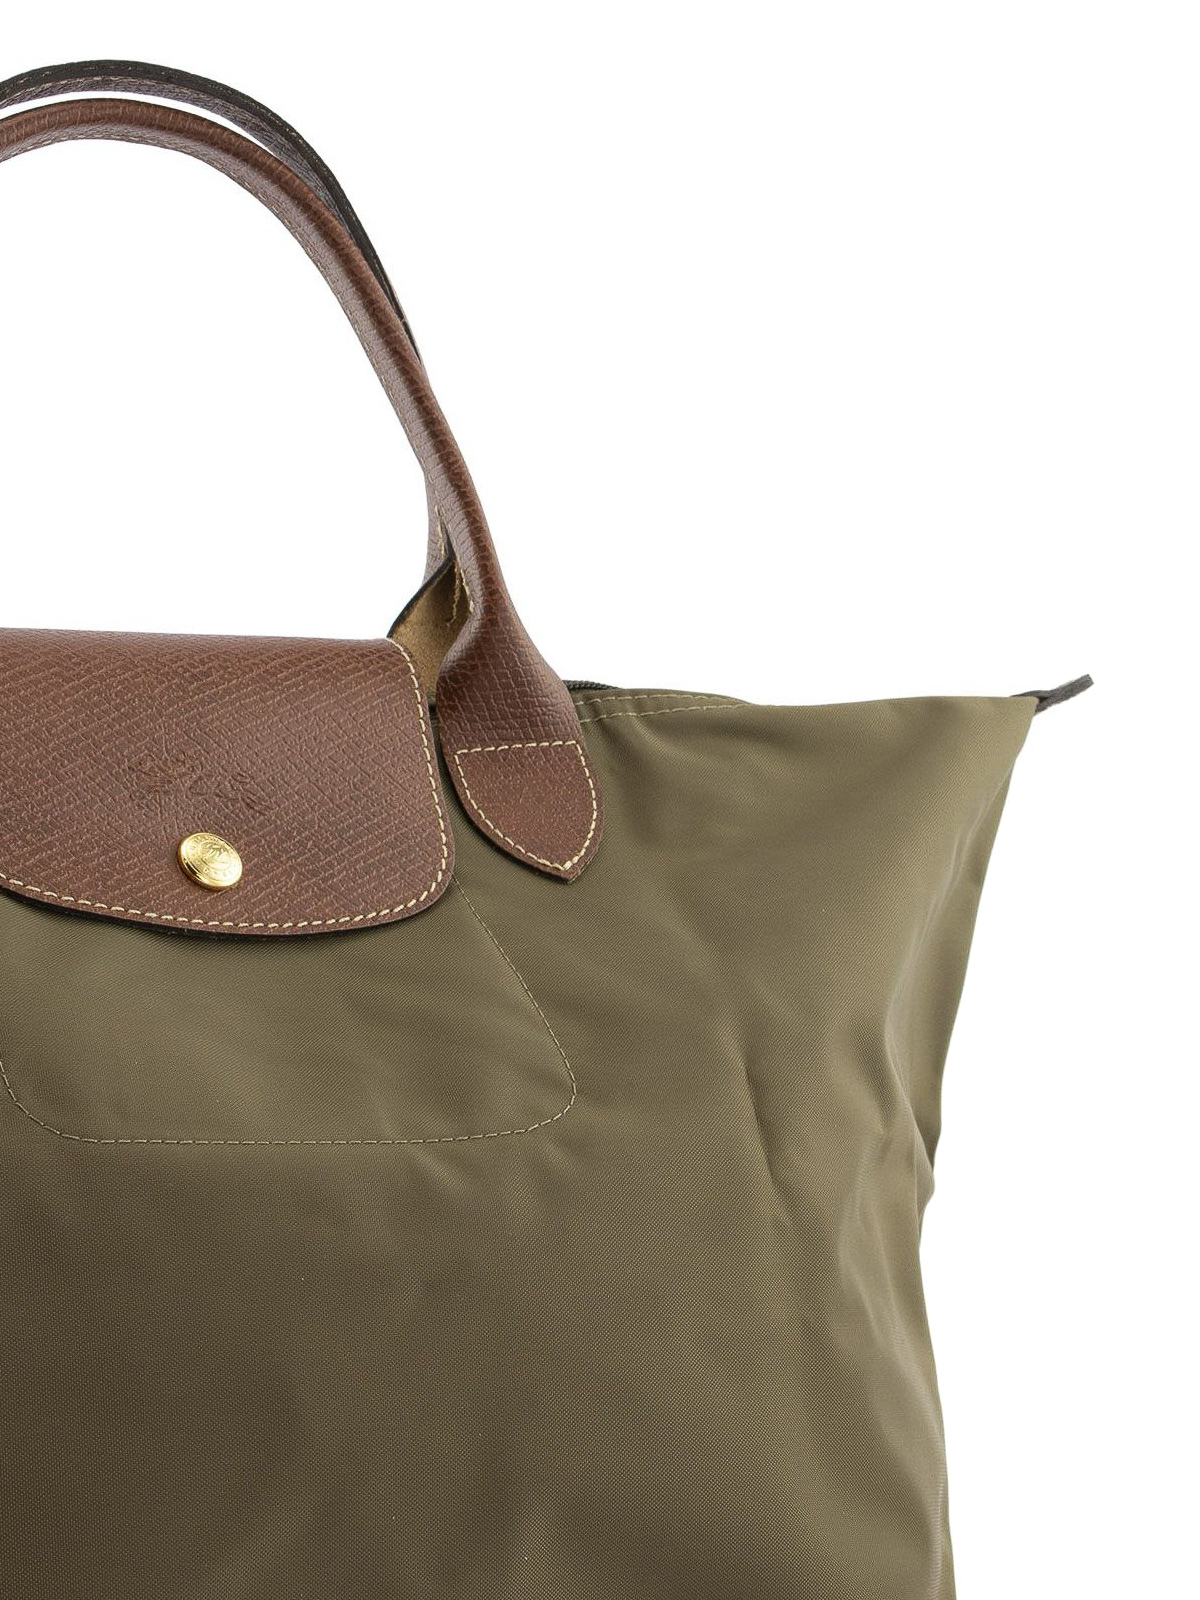 Longchamp Le Pliage Original Nylon Bag